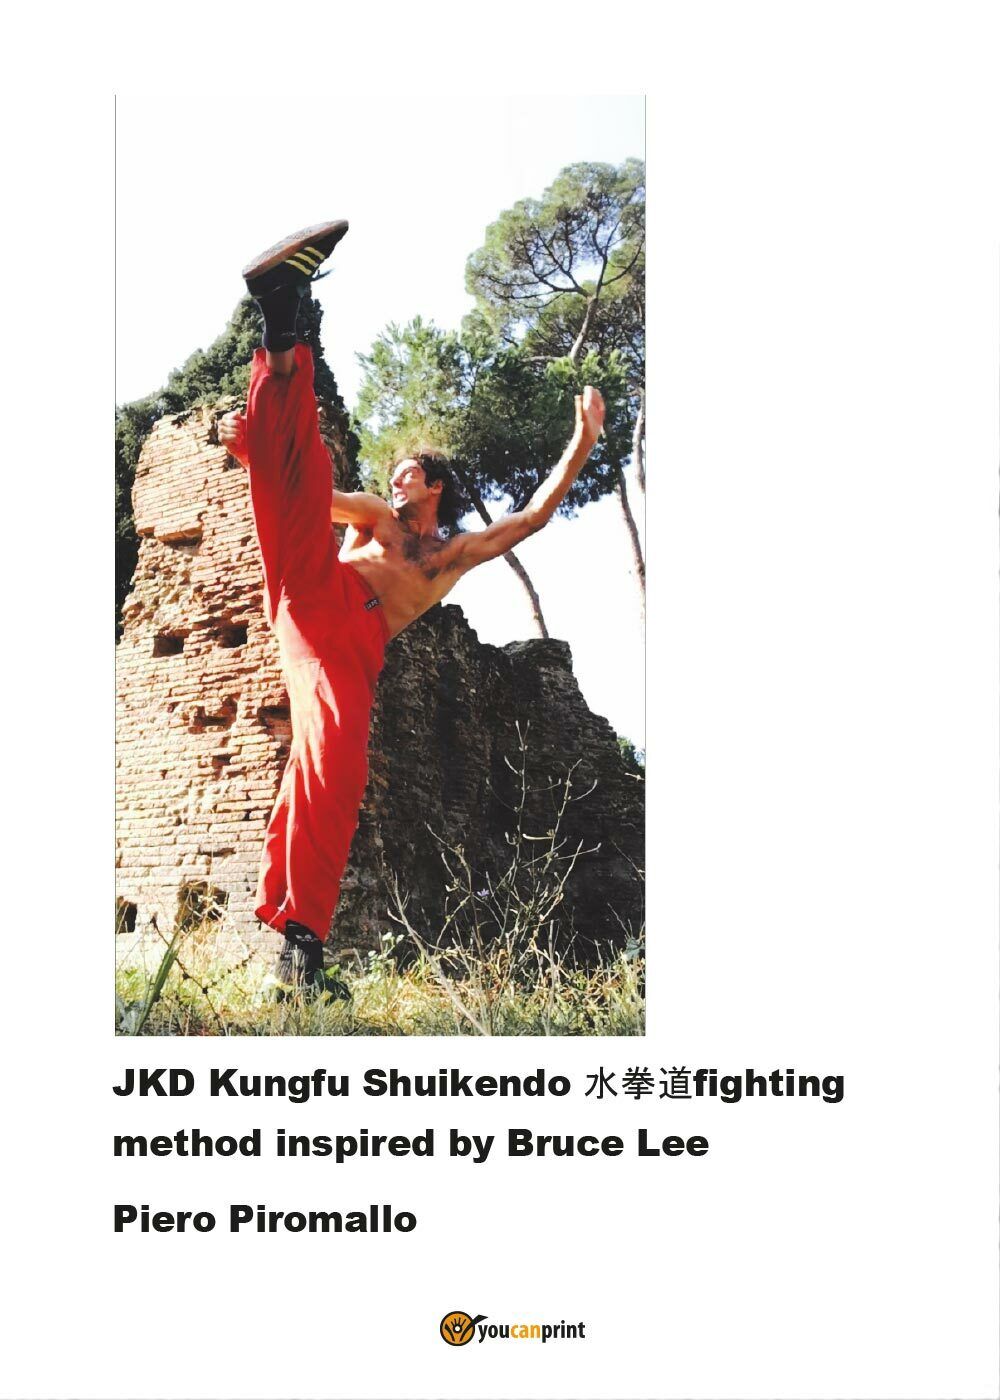 JKD Kungfu Shuikendo - Fighting method, di Piero Piromallo,  2016,  Youcan  - ER